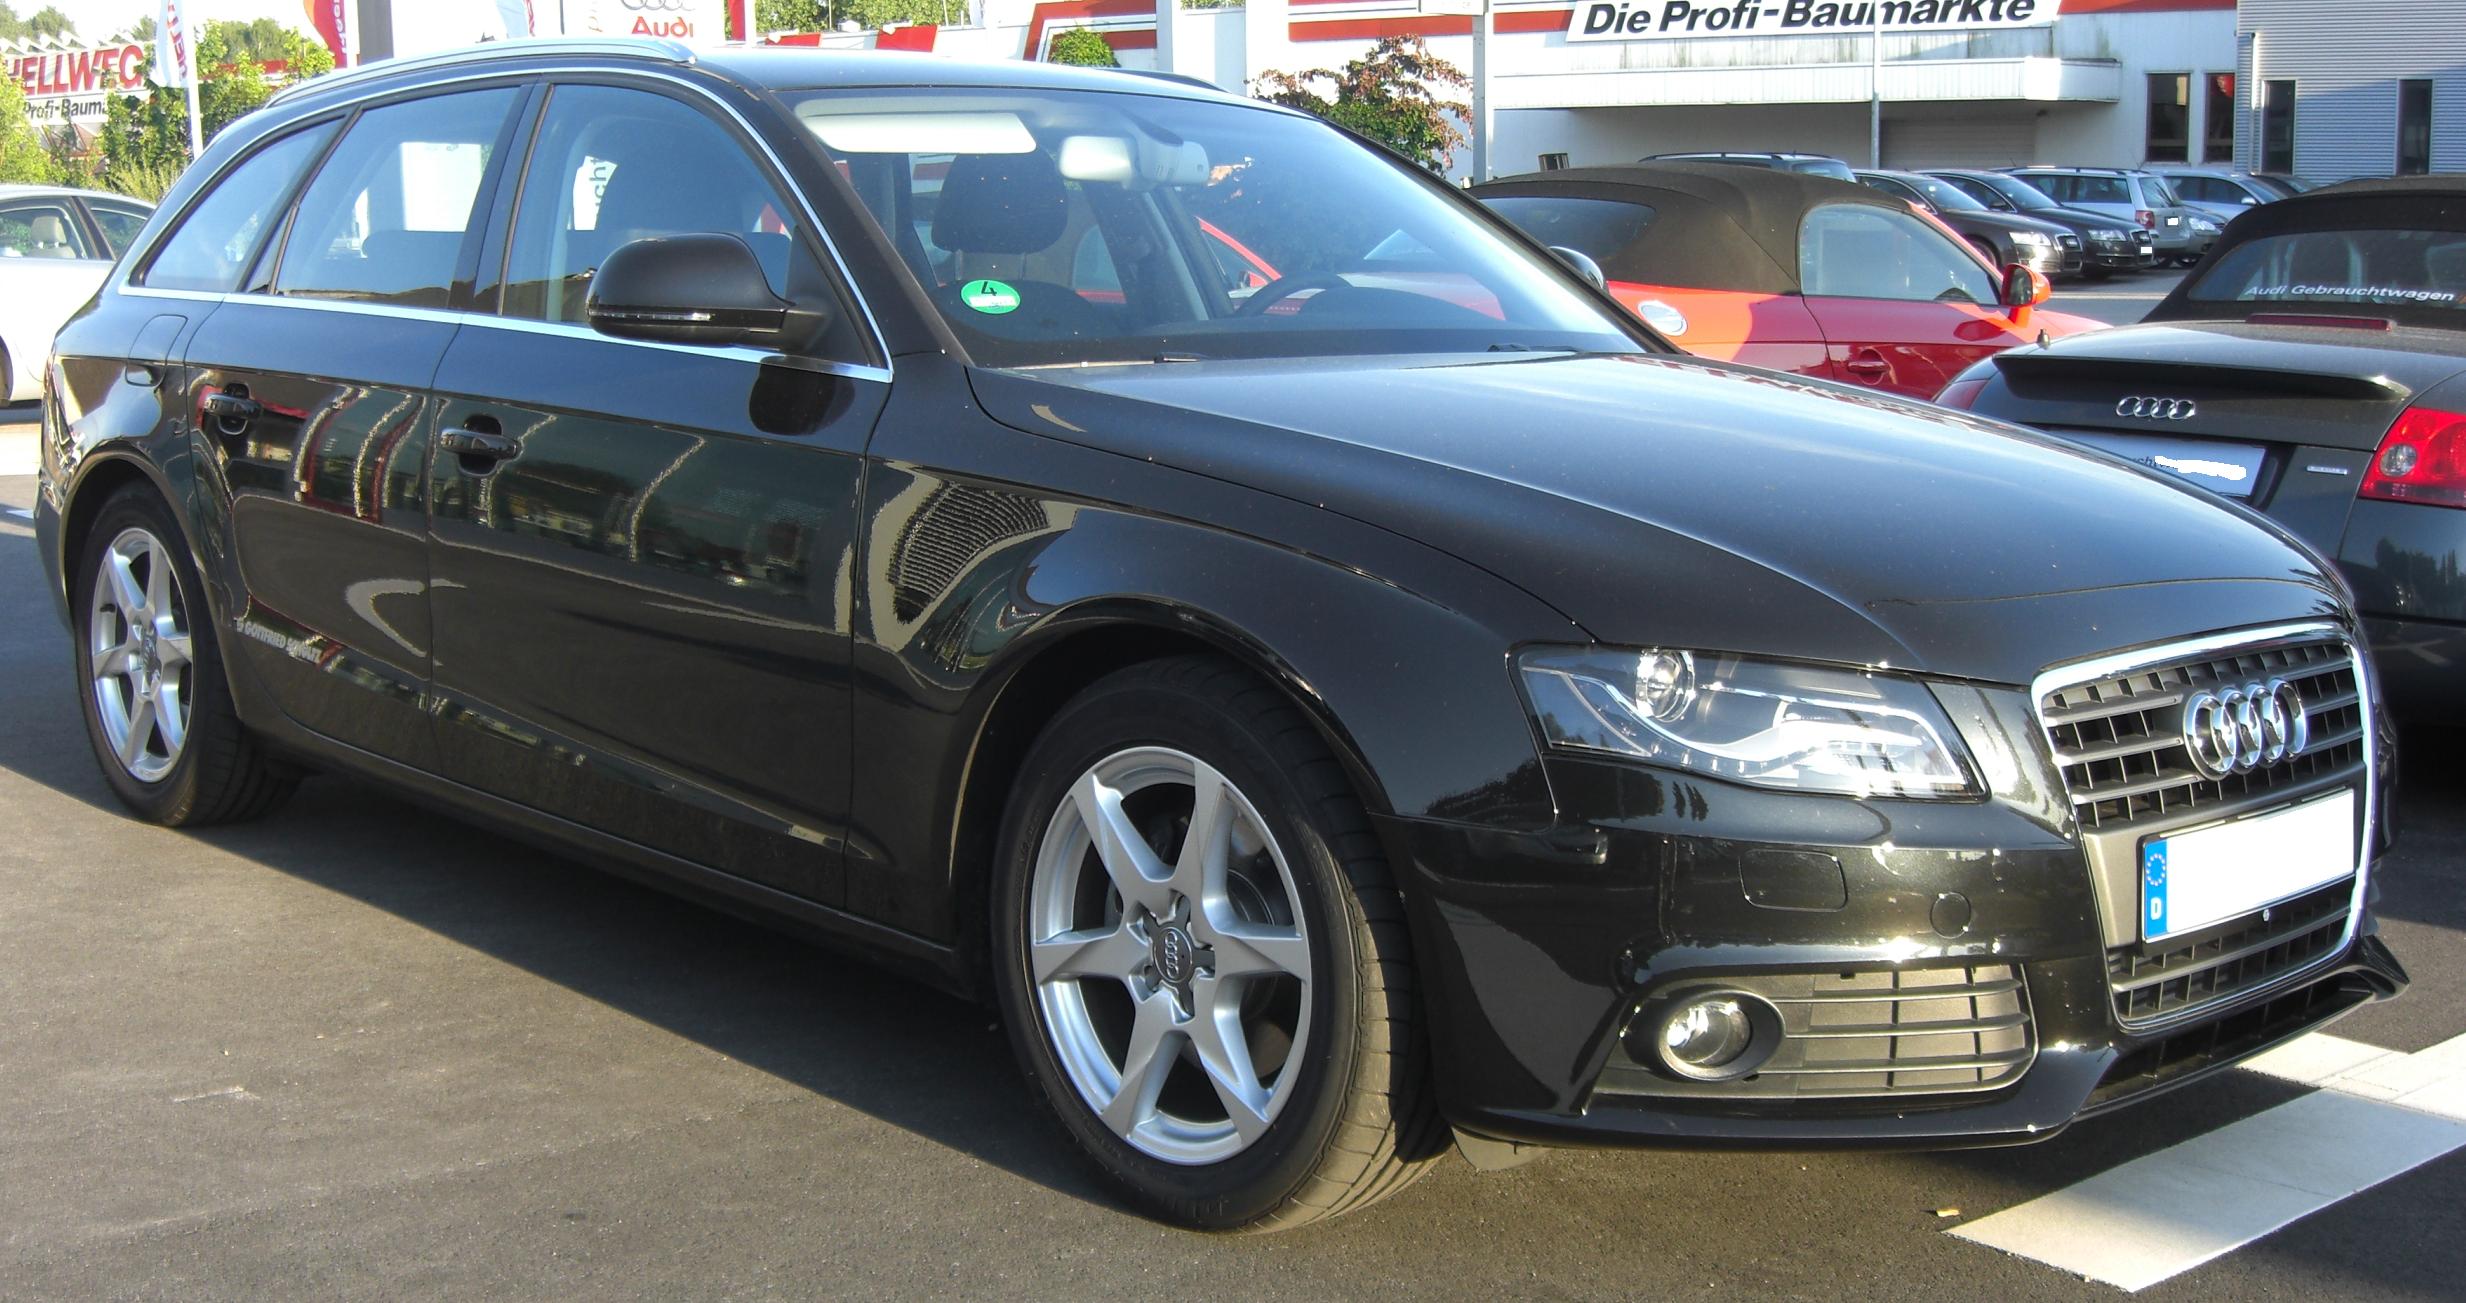 File:Audi A4 B8 Avant front 20100725.jpg - Wikimedia Commons